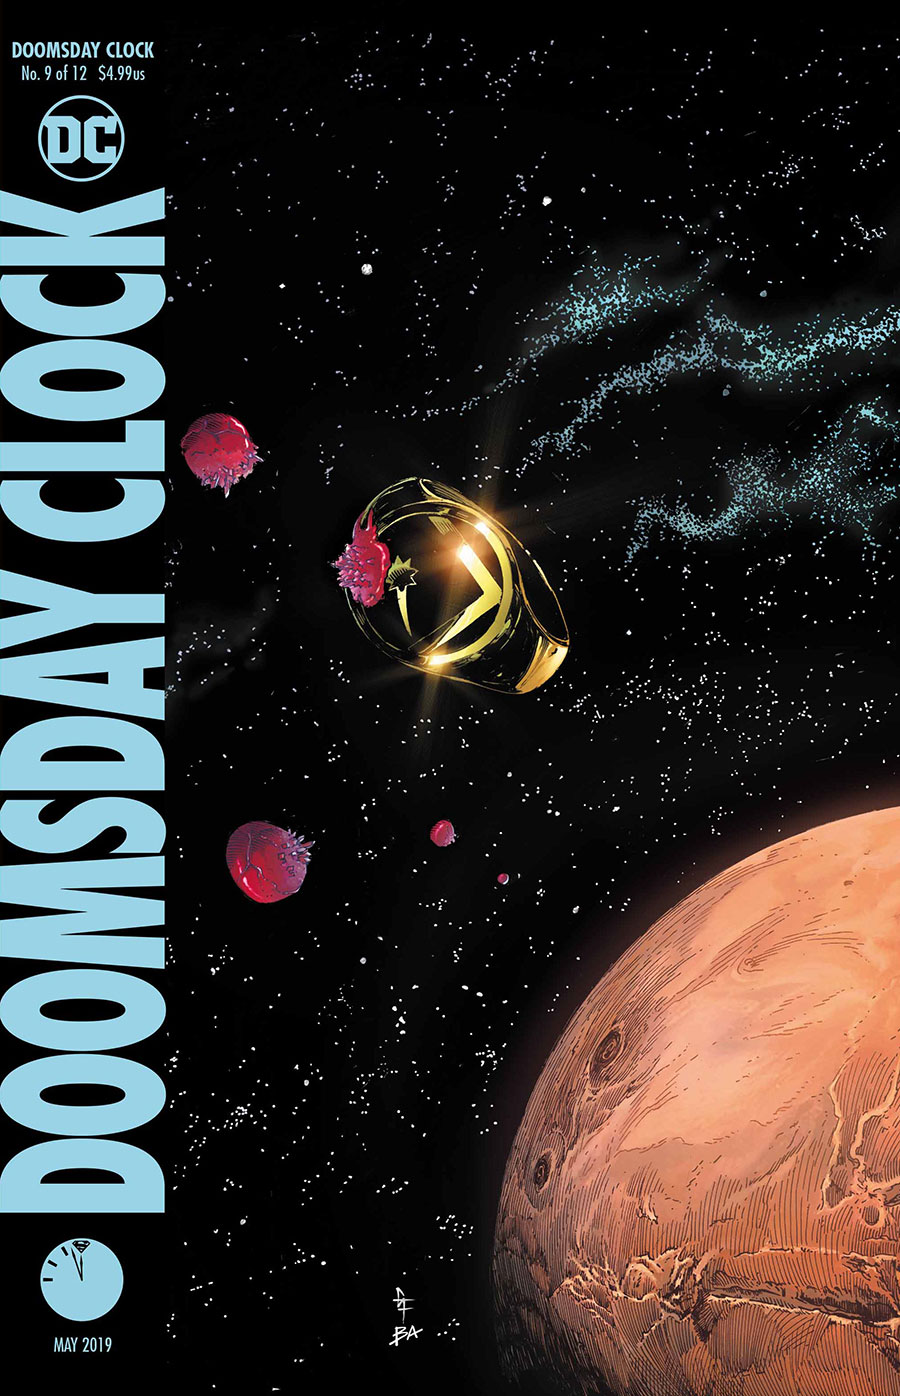 Doomsday Clock Cover 9